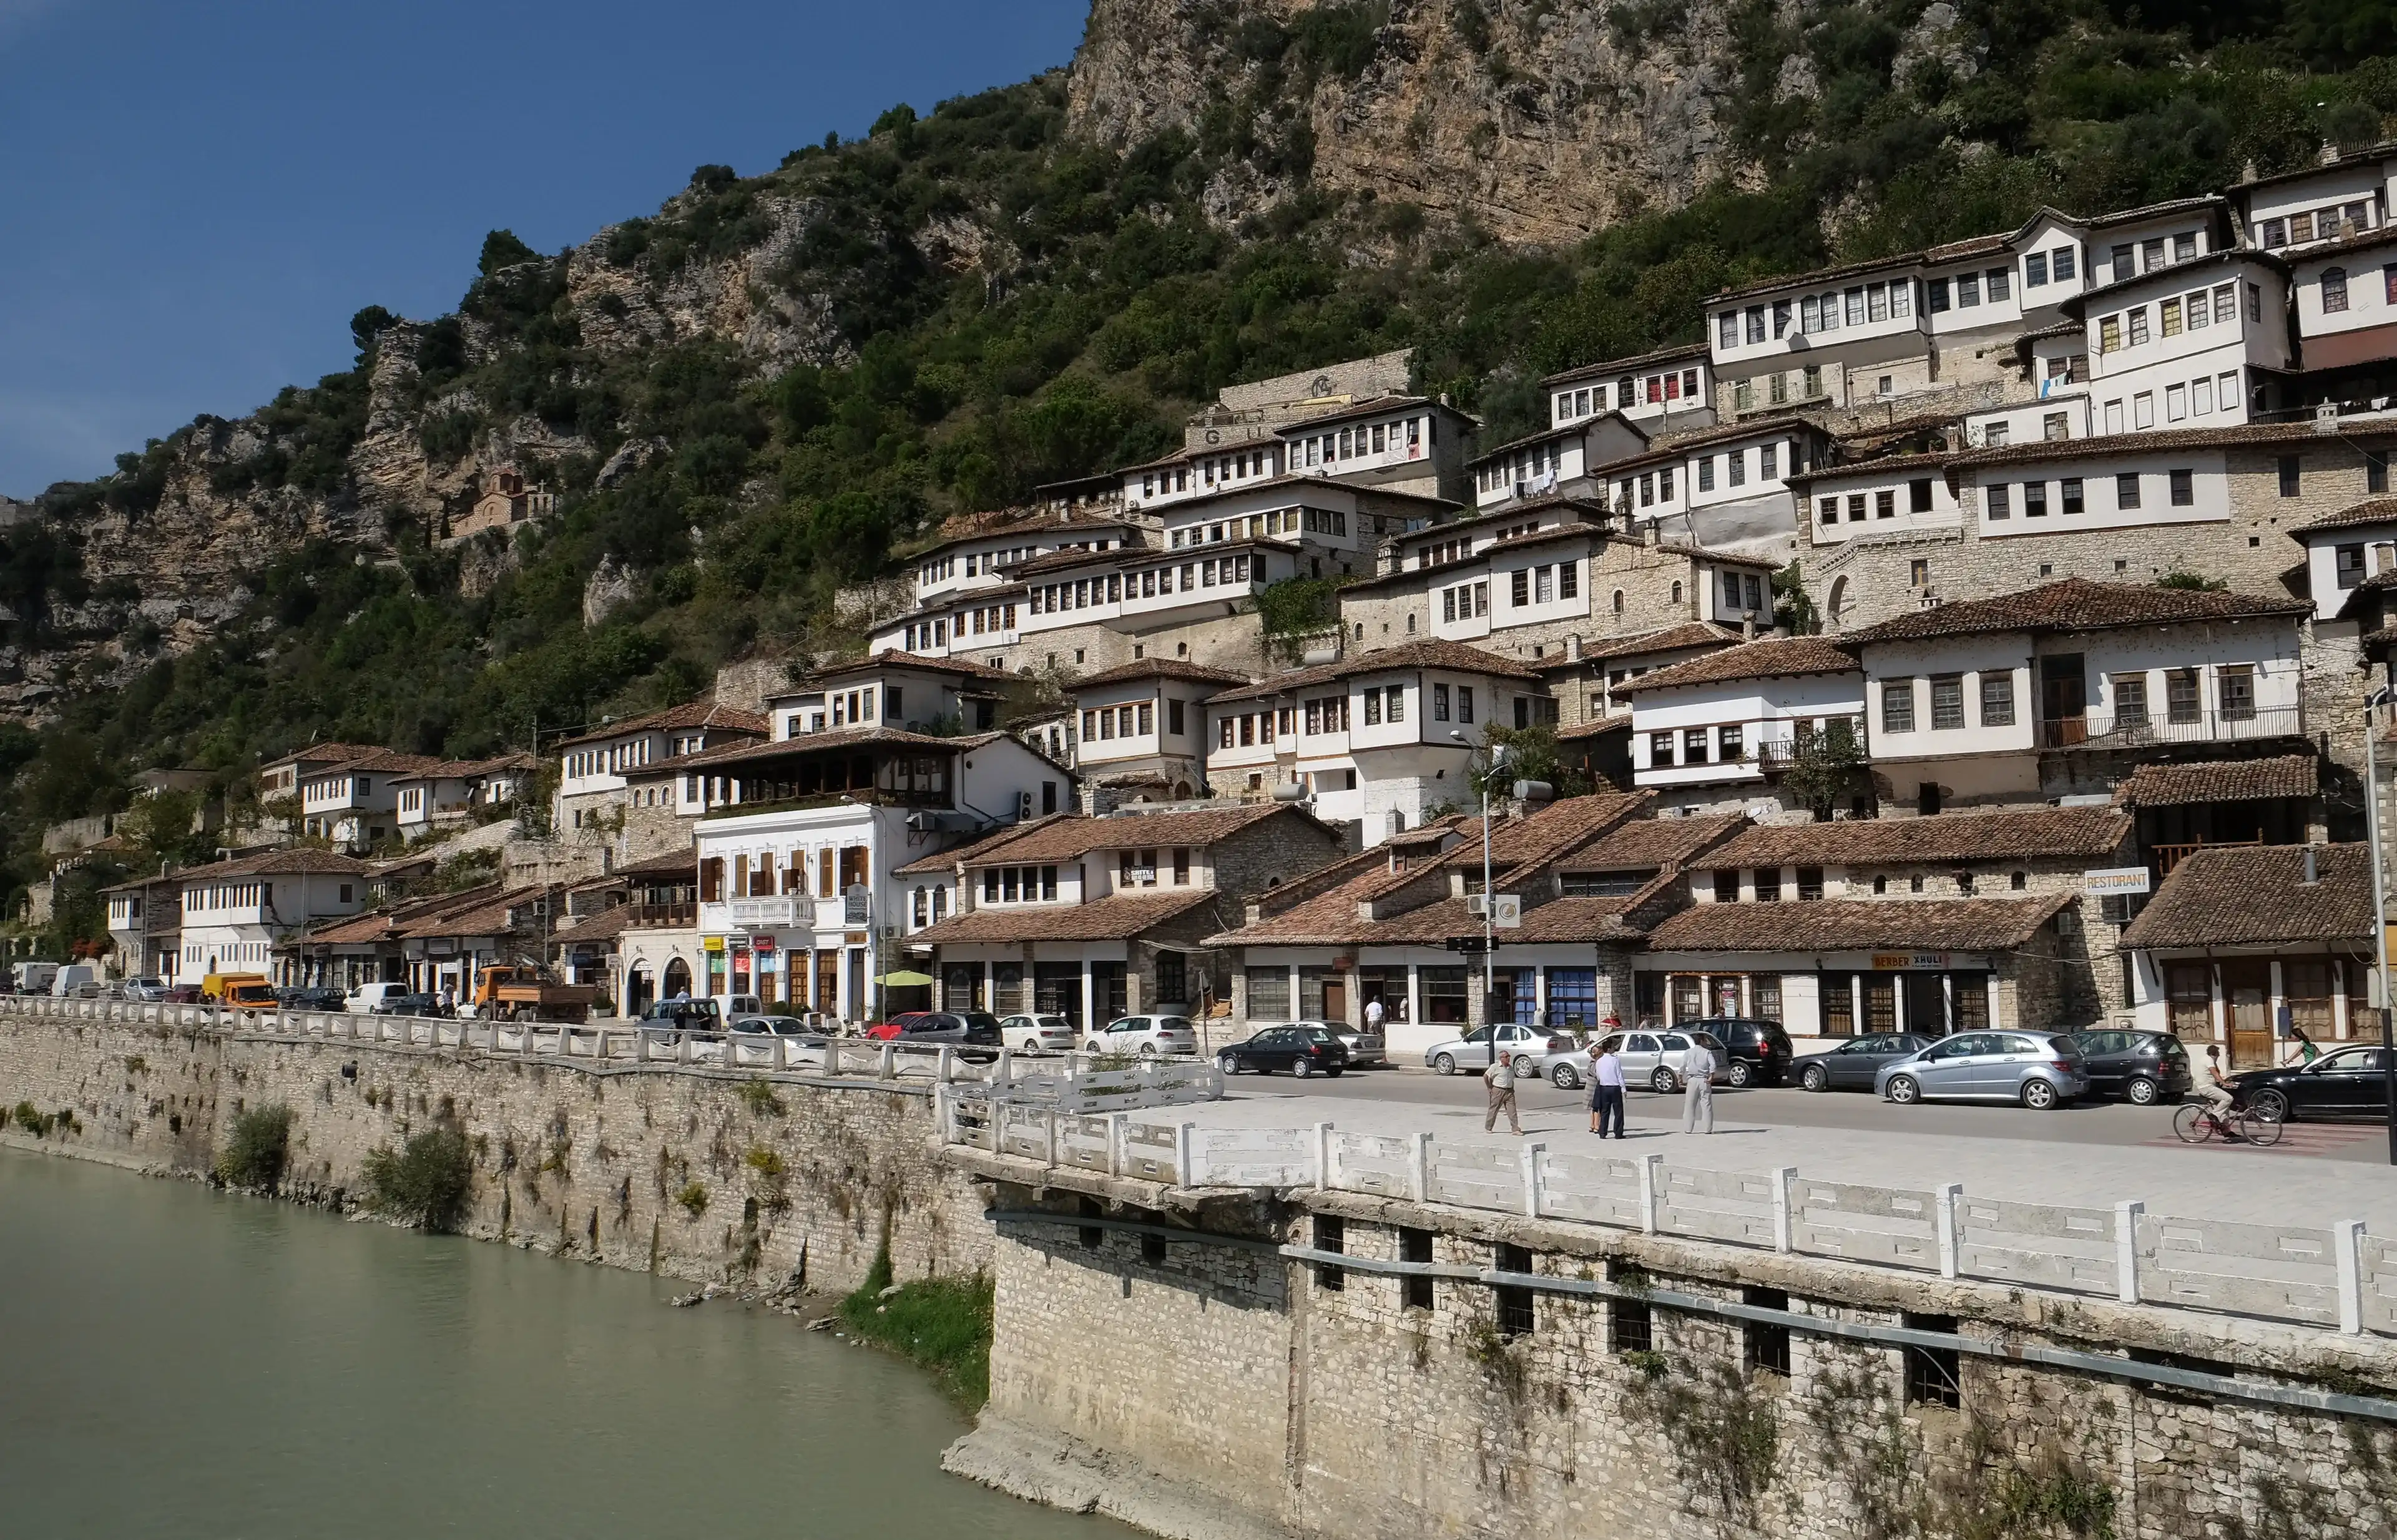 Berat County hotels. Best hotels in Berat County, Albania